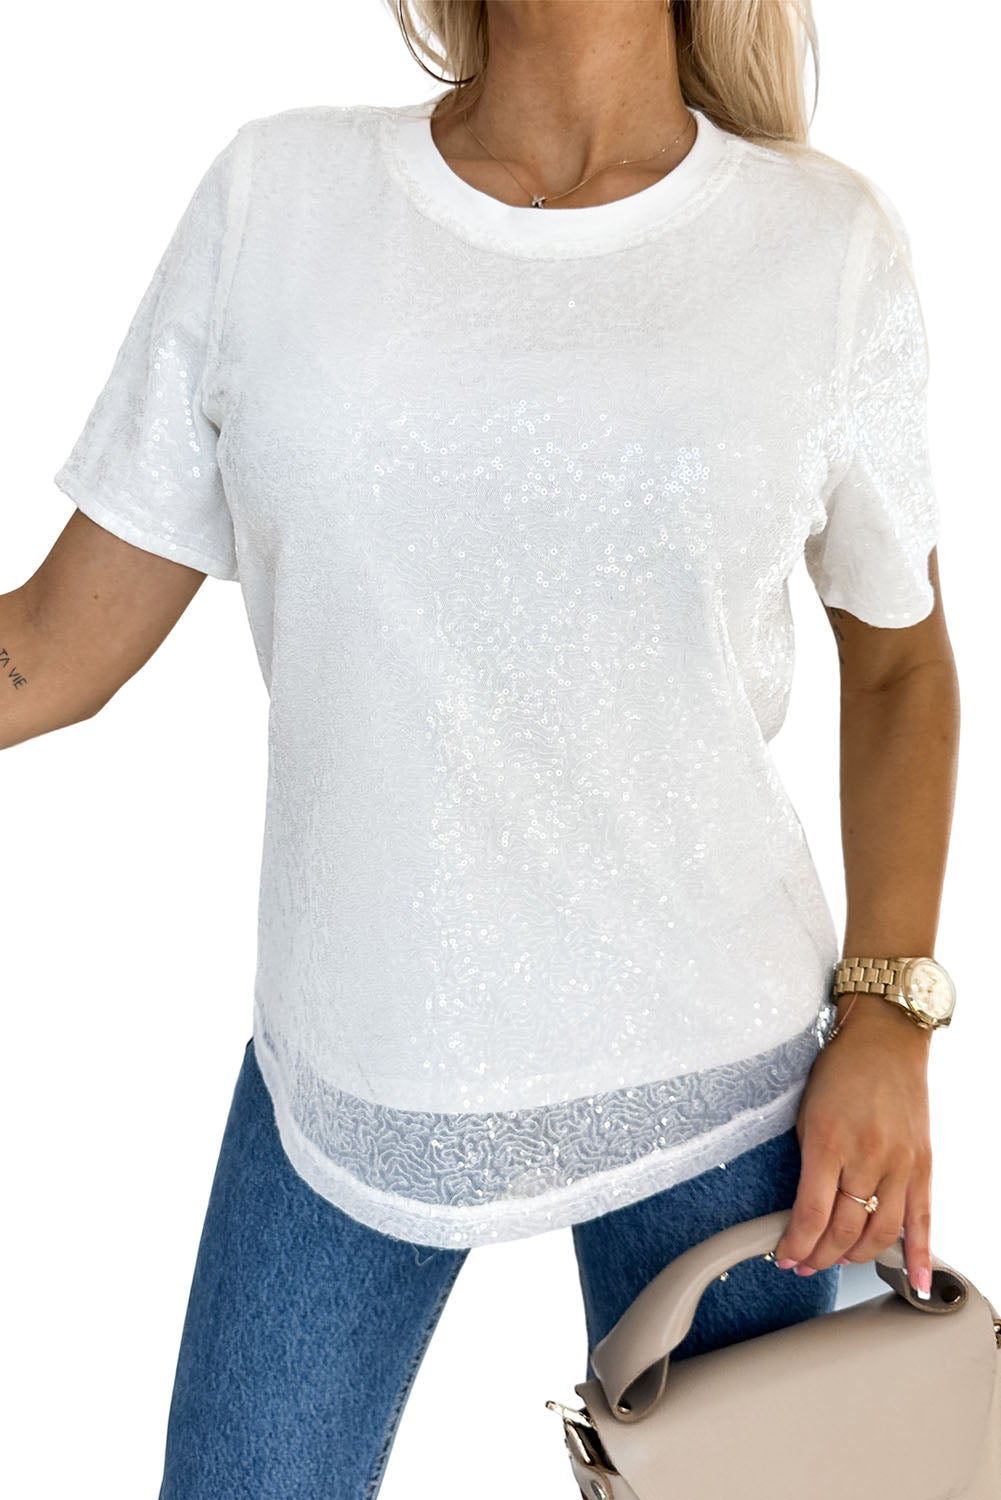 White Sequin Glitter Casual T Shirt